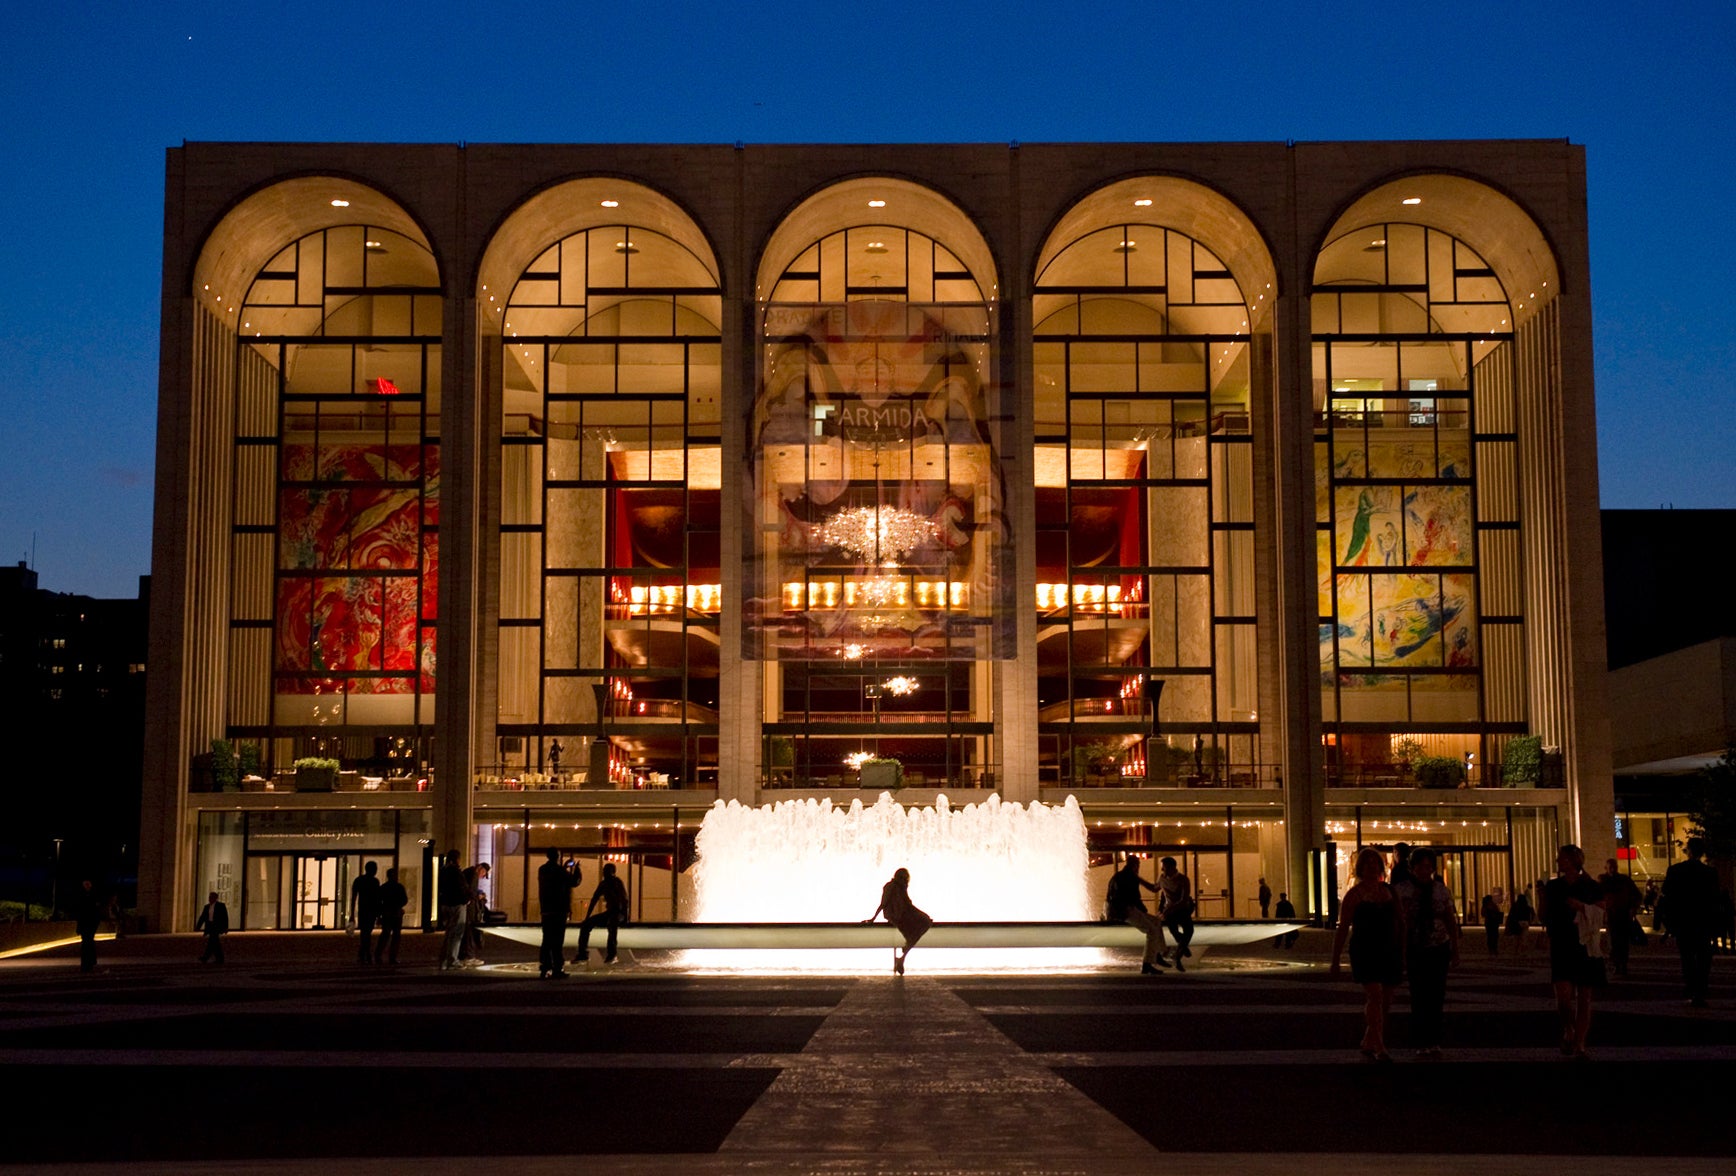 The Metropolitan Opera House in New York City